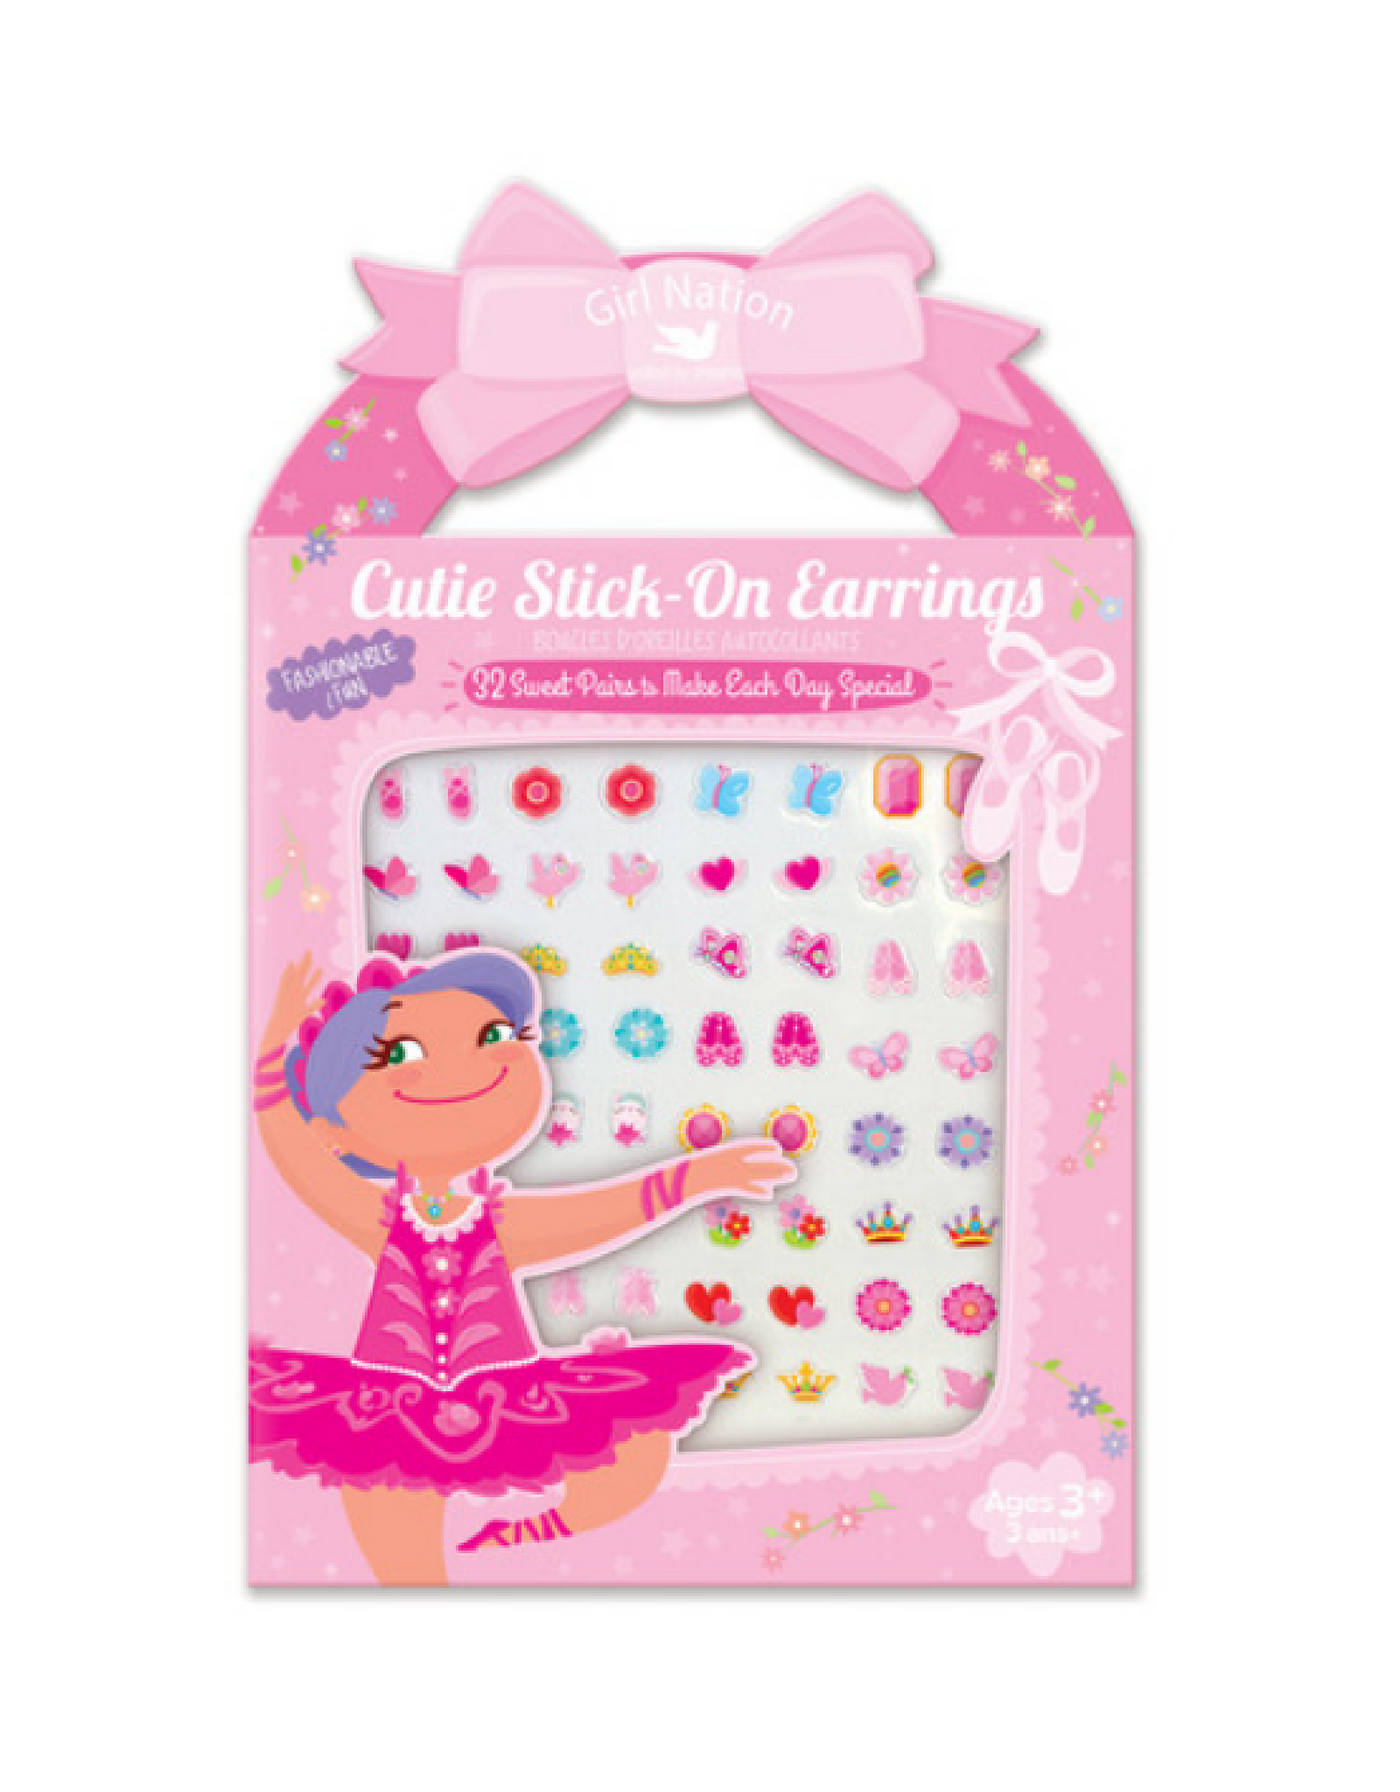 Cutie STICKER Earrings (5 packs) - Ballerina - Girl Nation